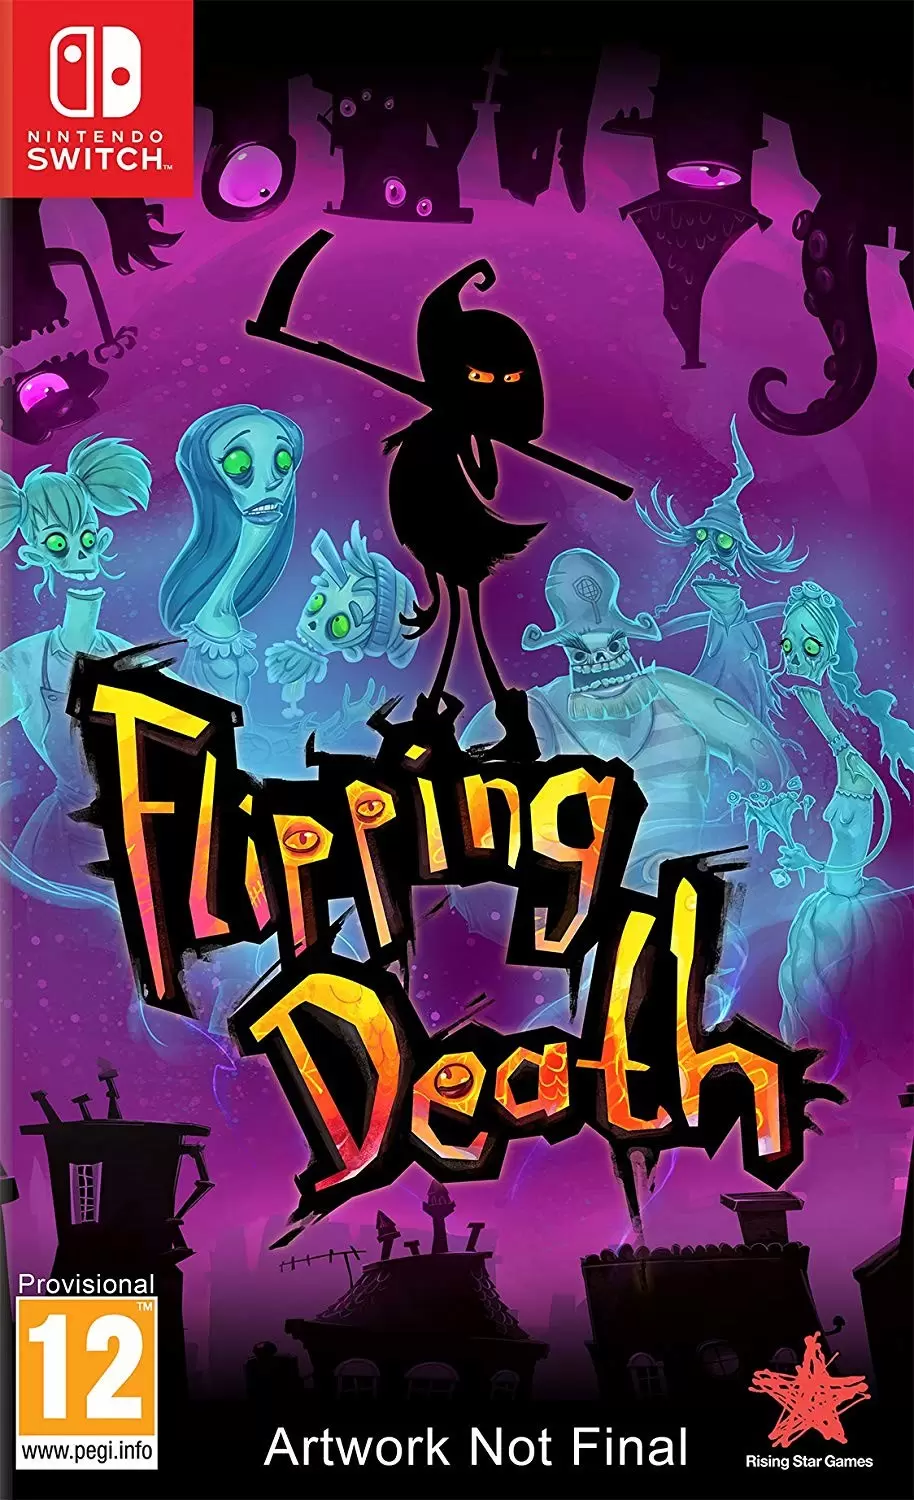 Nintendo Switch Games - Flipping Death